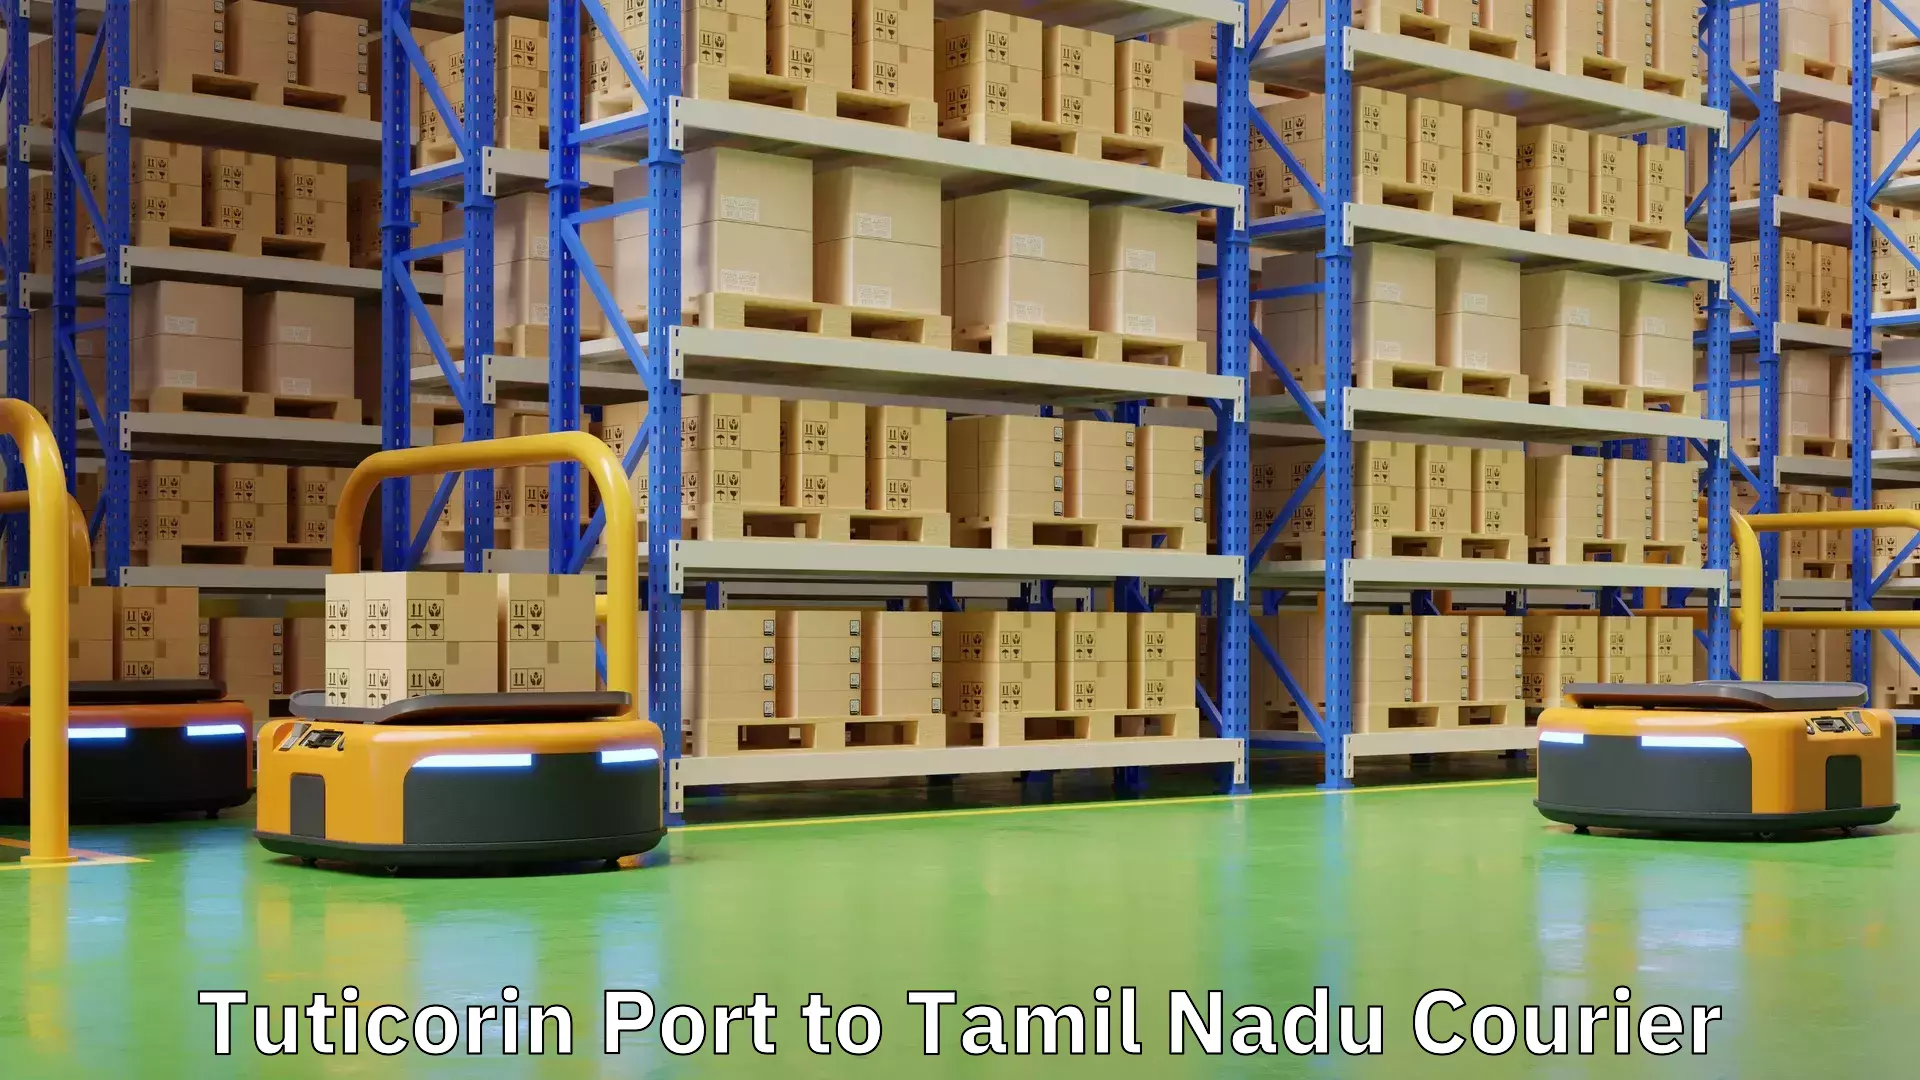 Online courier booking Tuticorin Port to Tamil Nadu